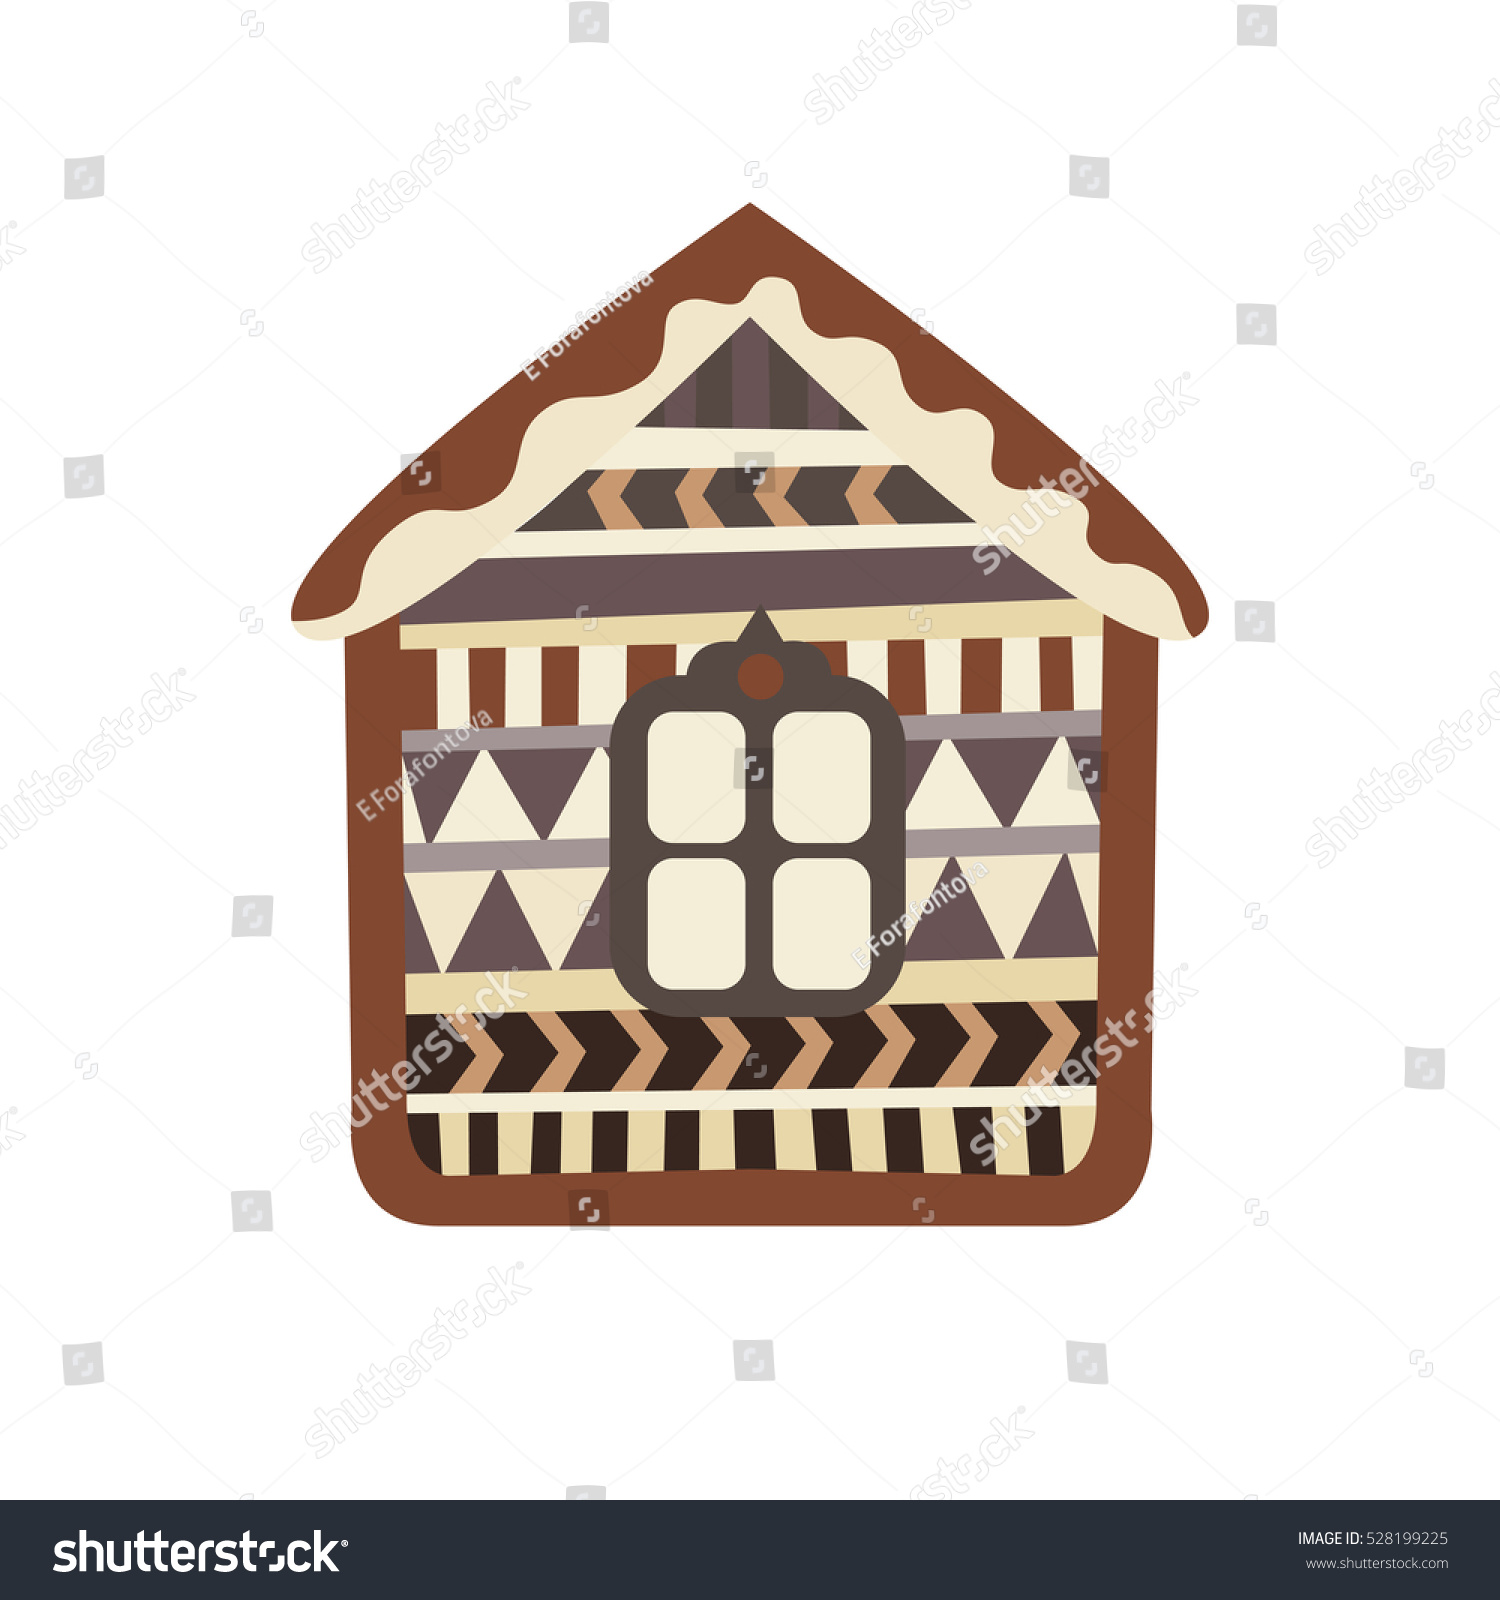 Christmas icons. Colorful christmas gingerbread house icons eps 